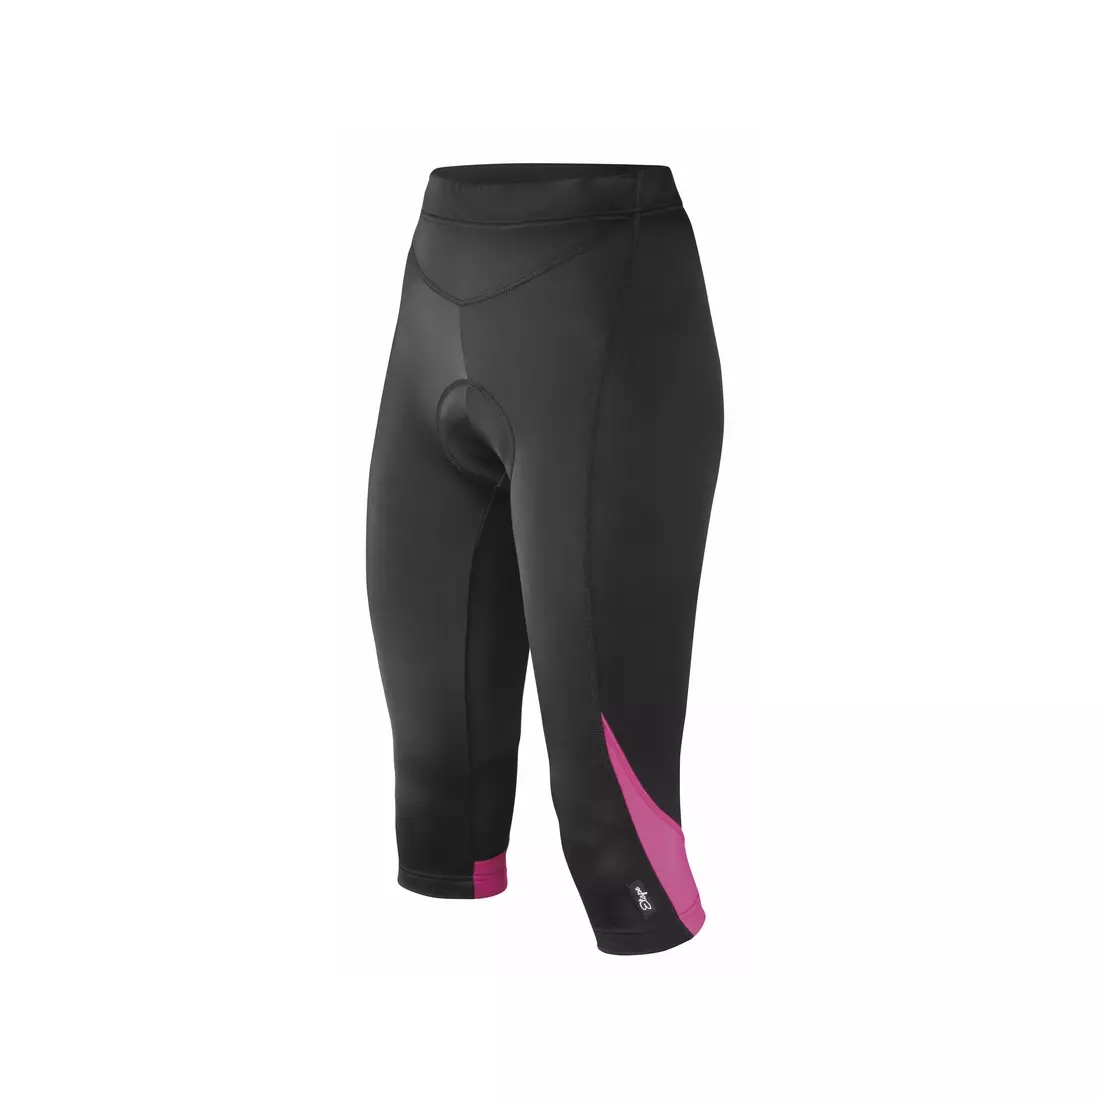 ETAPE NATTY women's 3/4 shorts, color: black and pink 1402612